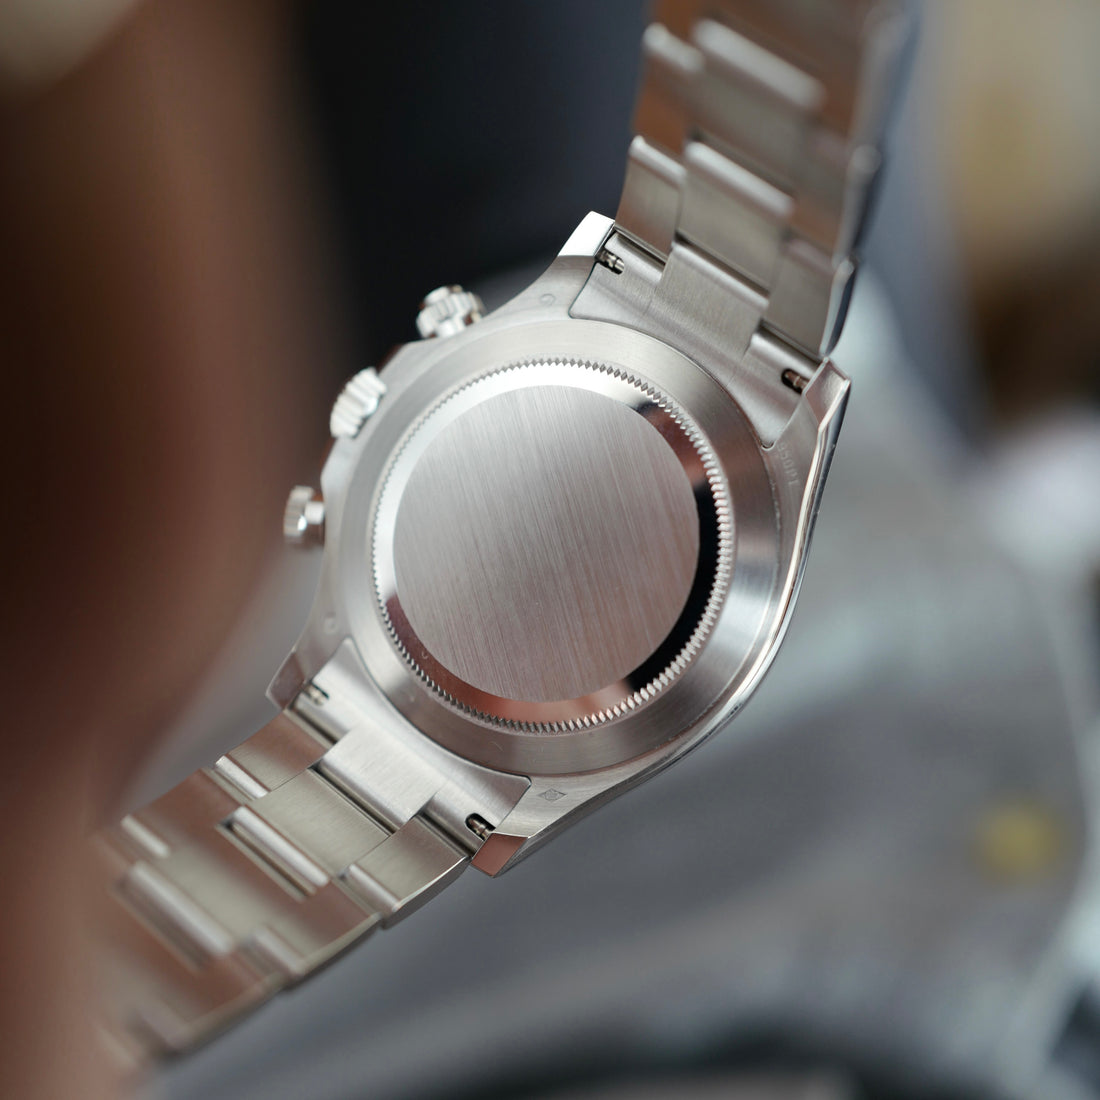 Rolex Platinum Cosmograph Daytona Watch Ref. 116506 (NEW ARRIVAL)